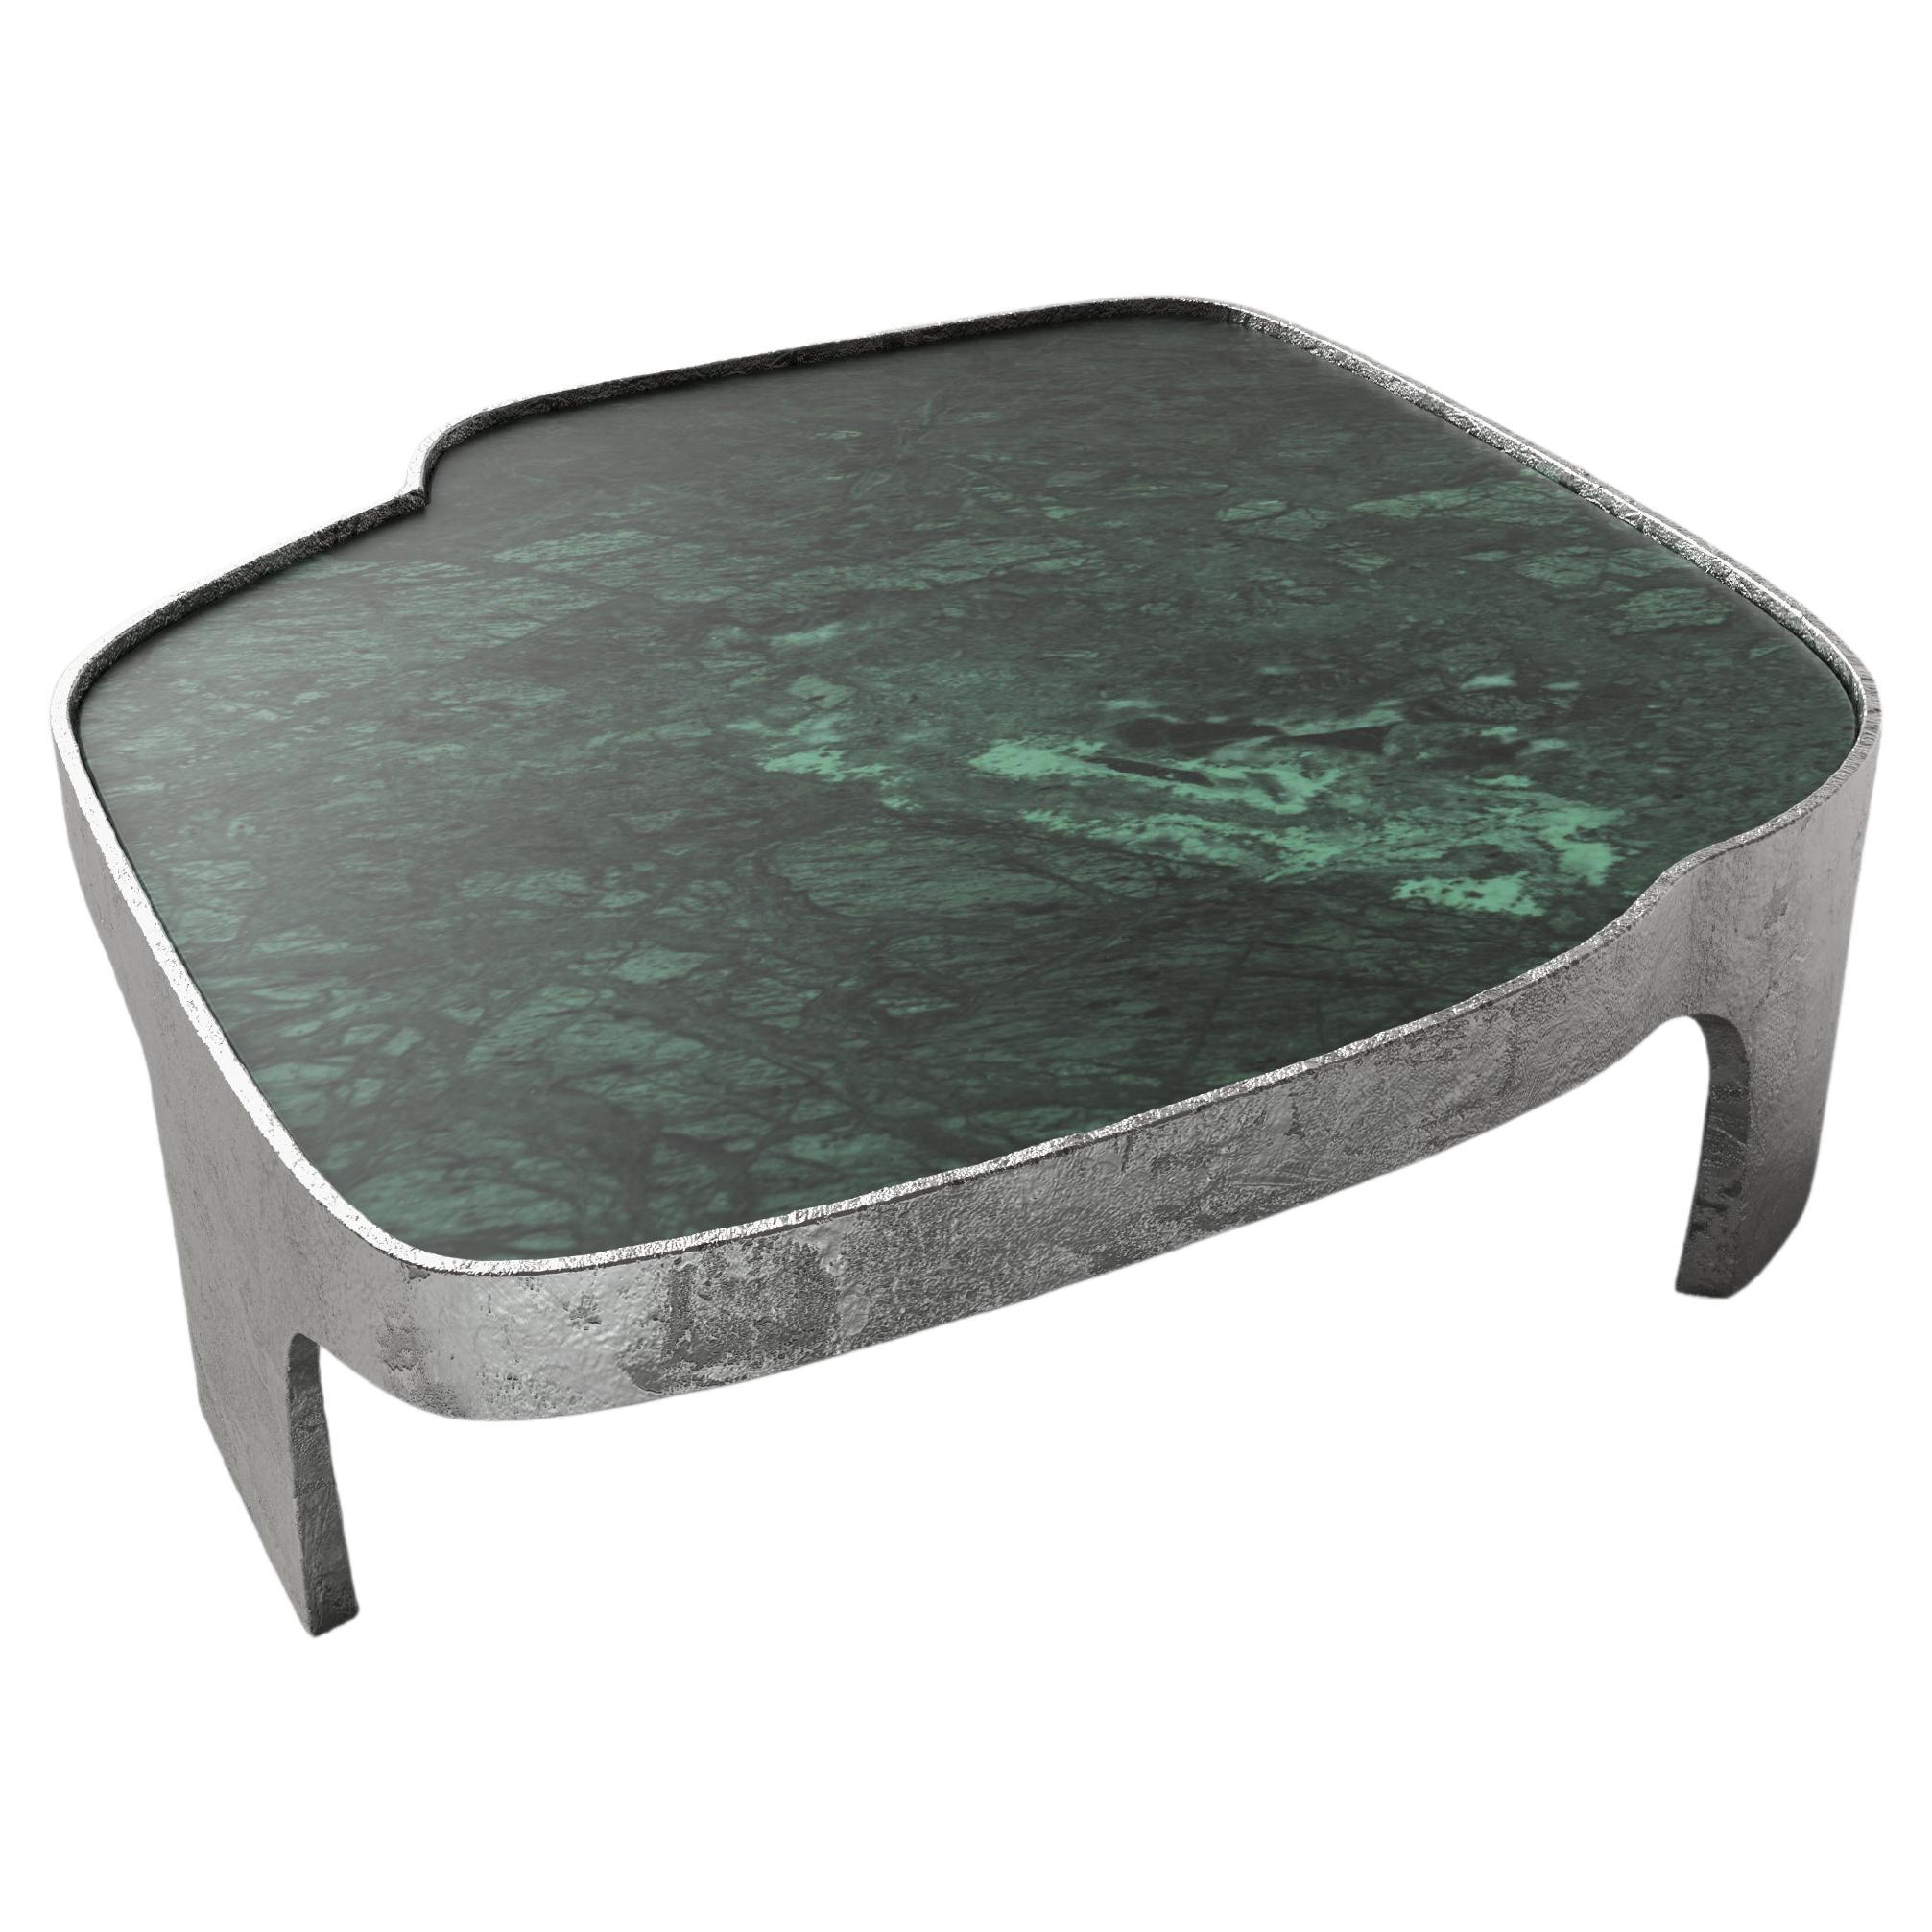 Limited Edition Marble Aluminium Table, Sumatra V2 by Edizione Limitata For Sale